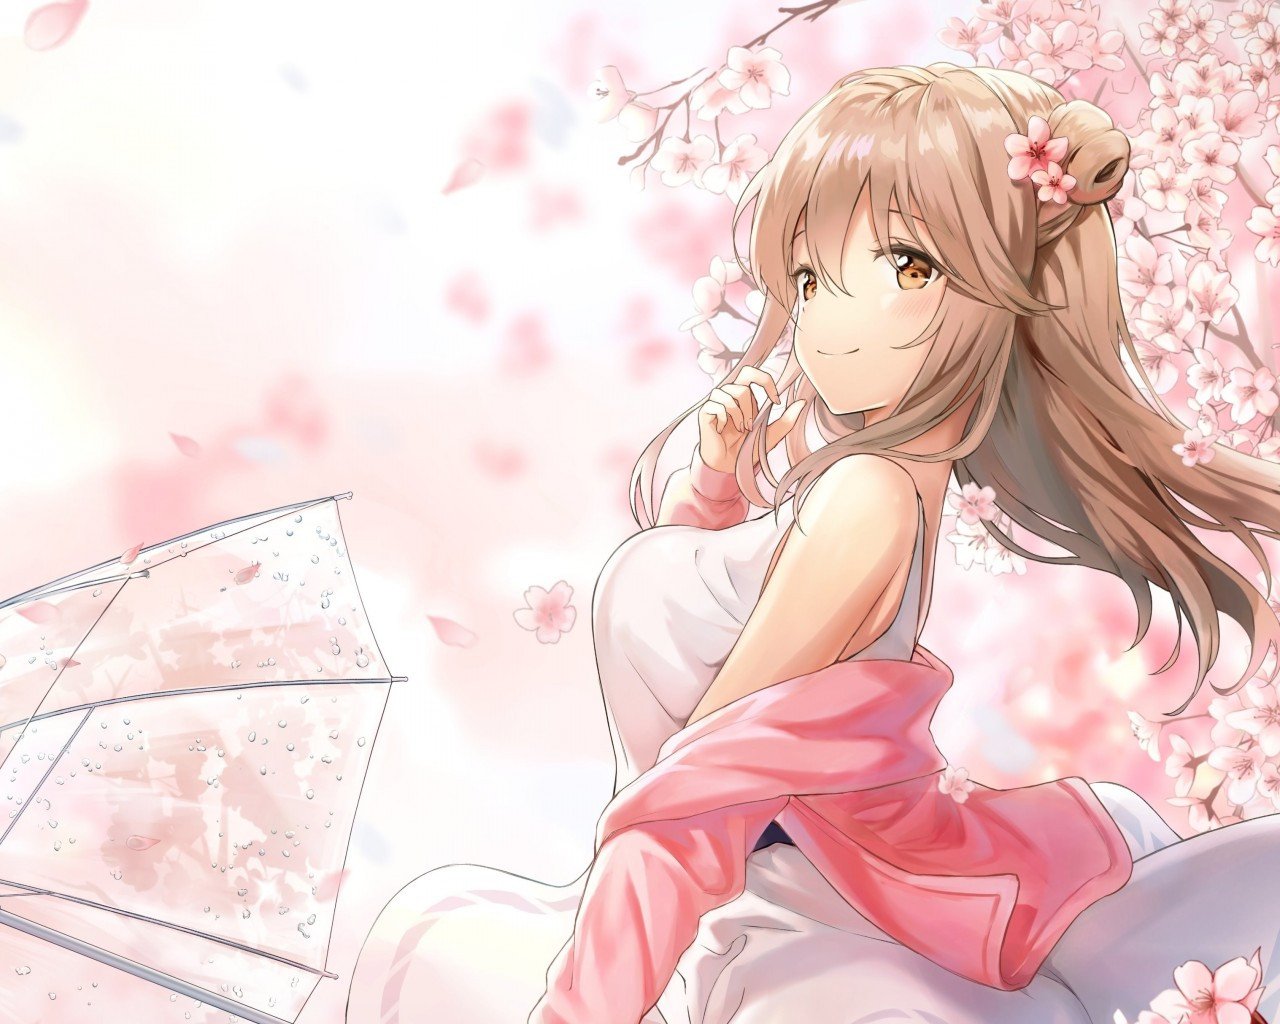 Download 1280x1024 Cute Anime Girl, Profile View, Sakura Blossom, White Dress, Umbrella Wallpaper